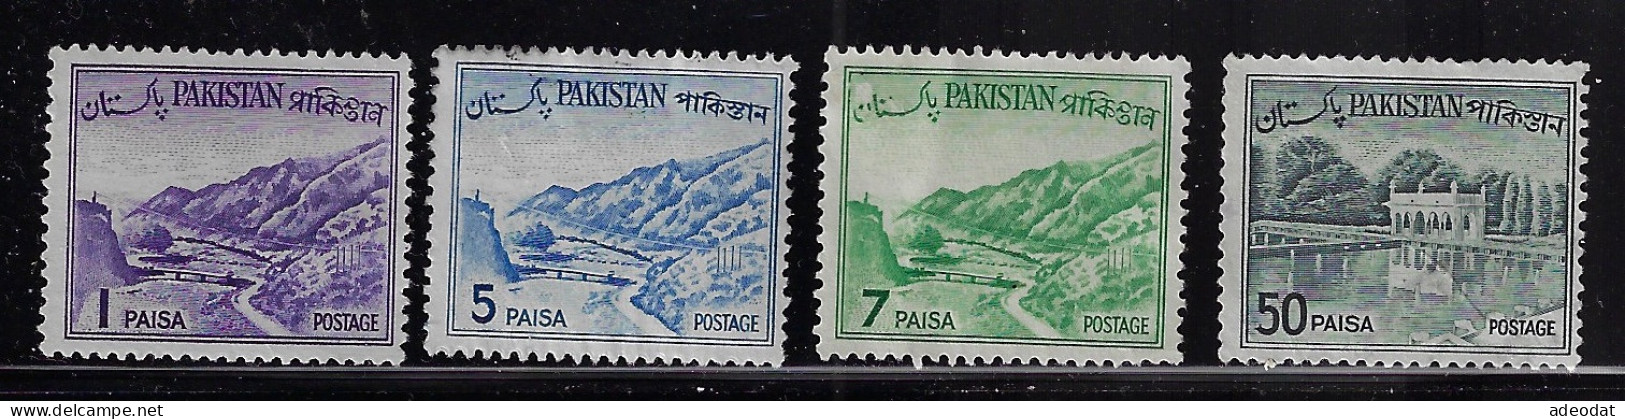 PAKISTAN  1961   SCOTT #129,132,133,138  MH  CV $6.40 - Pakistan